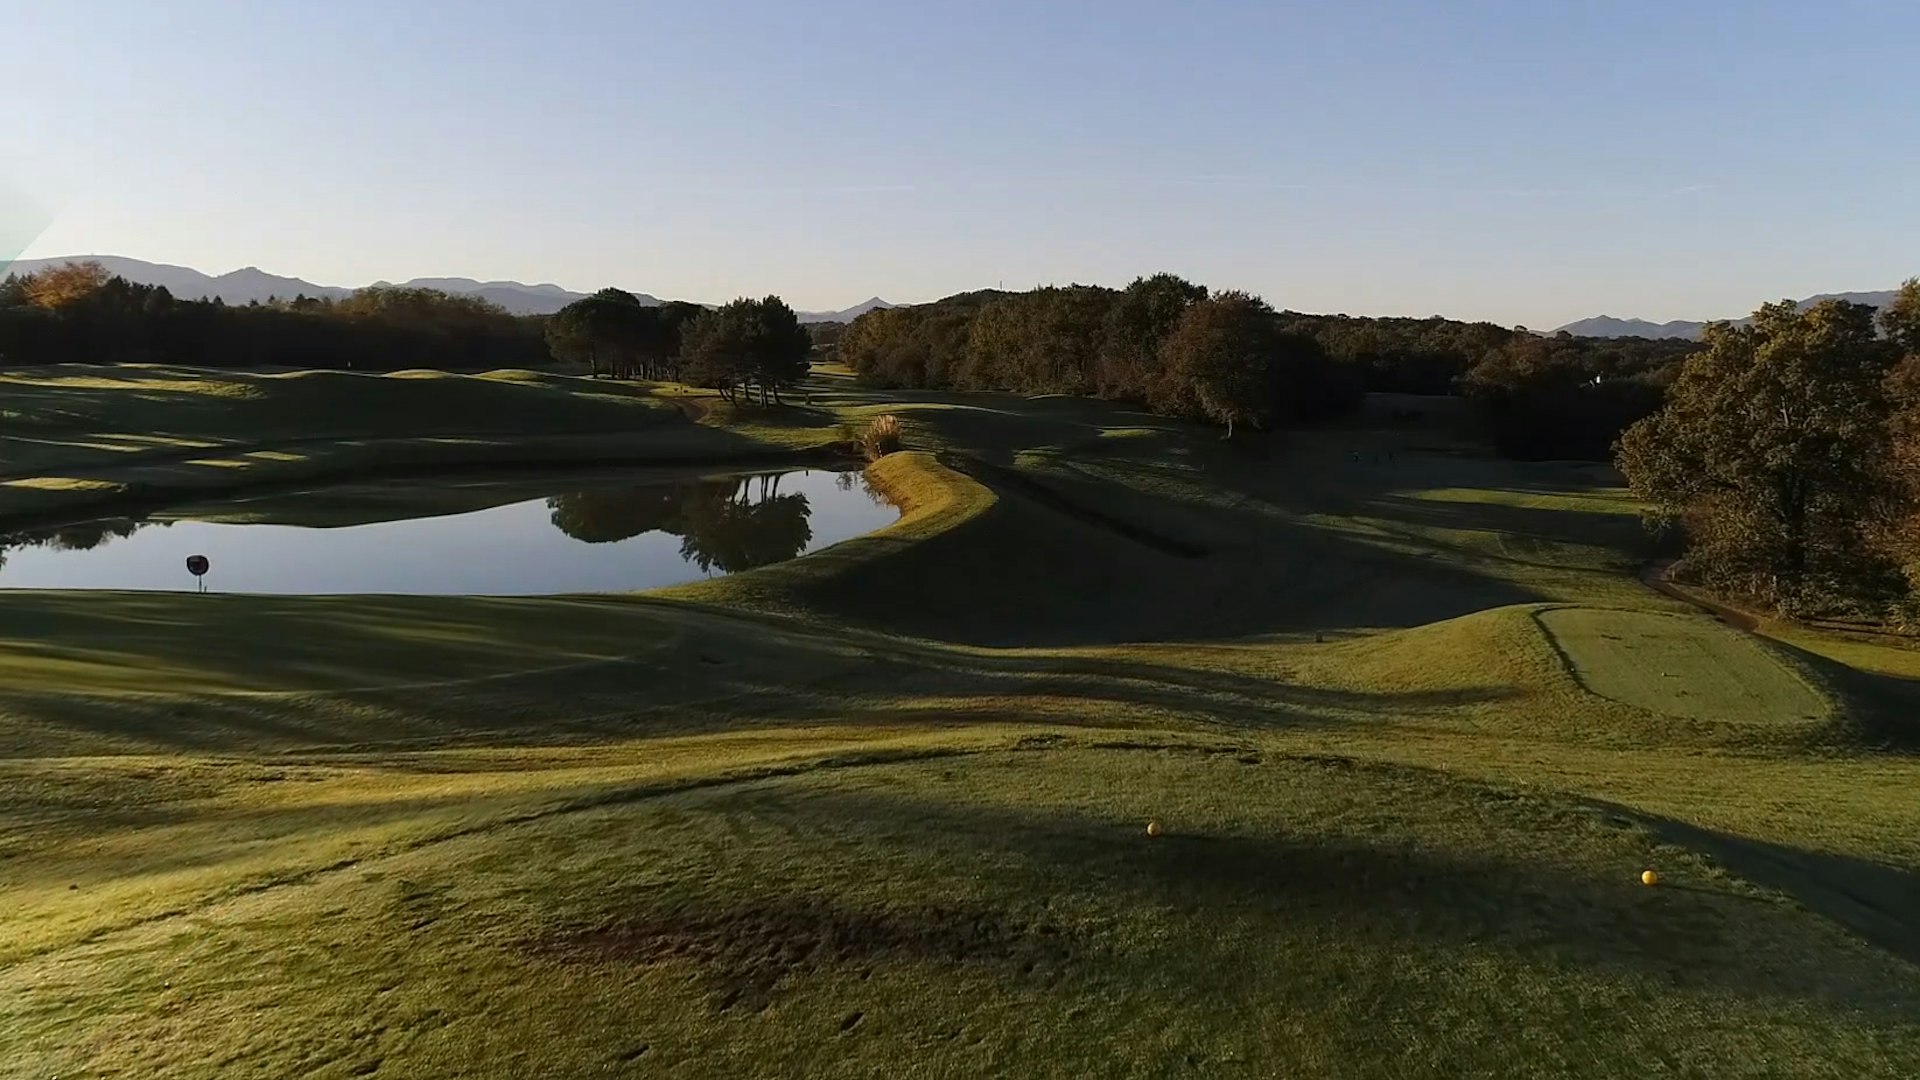 Le Golf de la semaine : Makila Golf Club